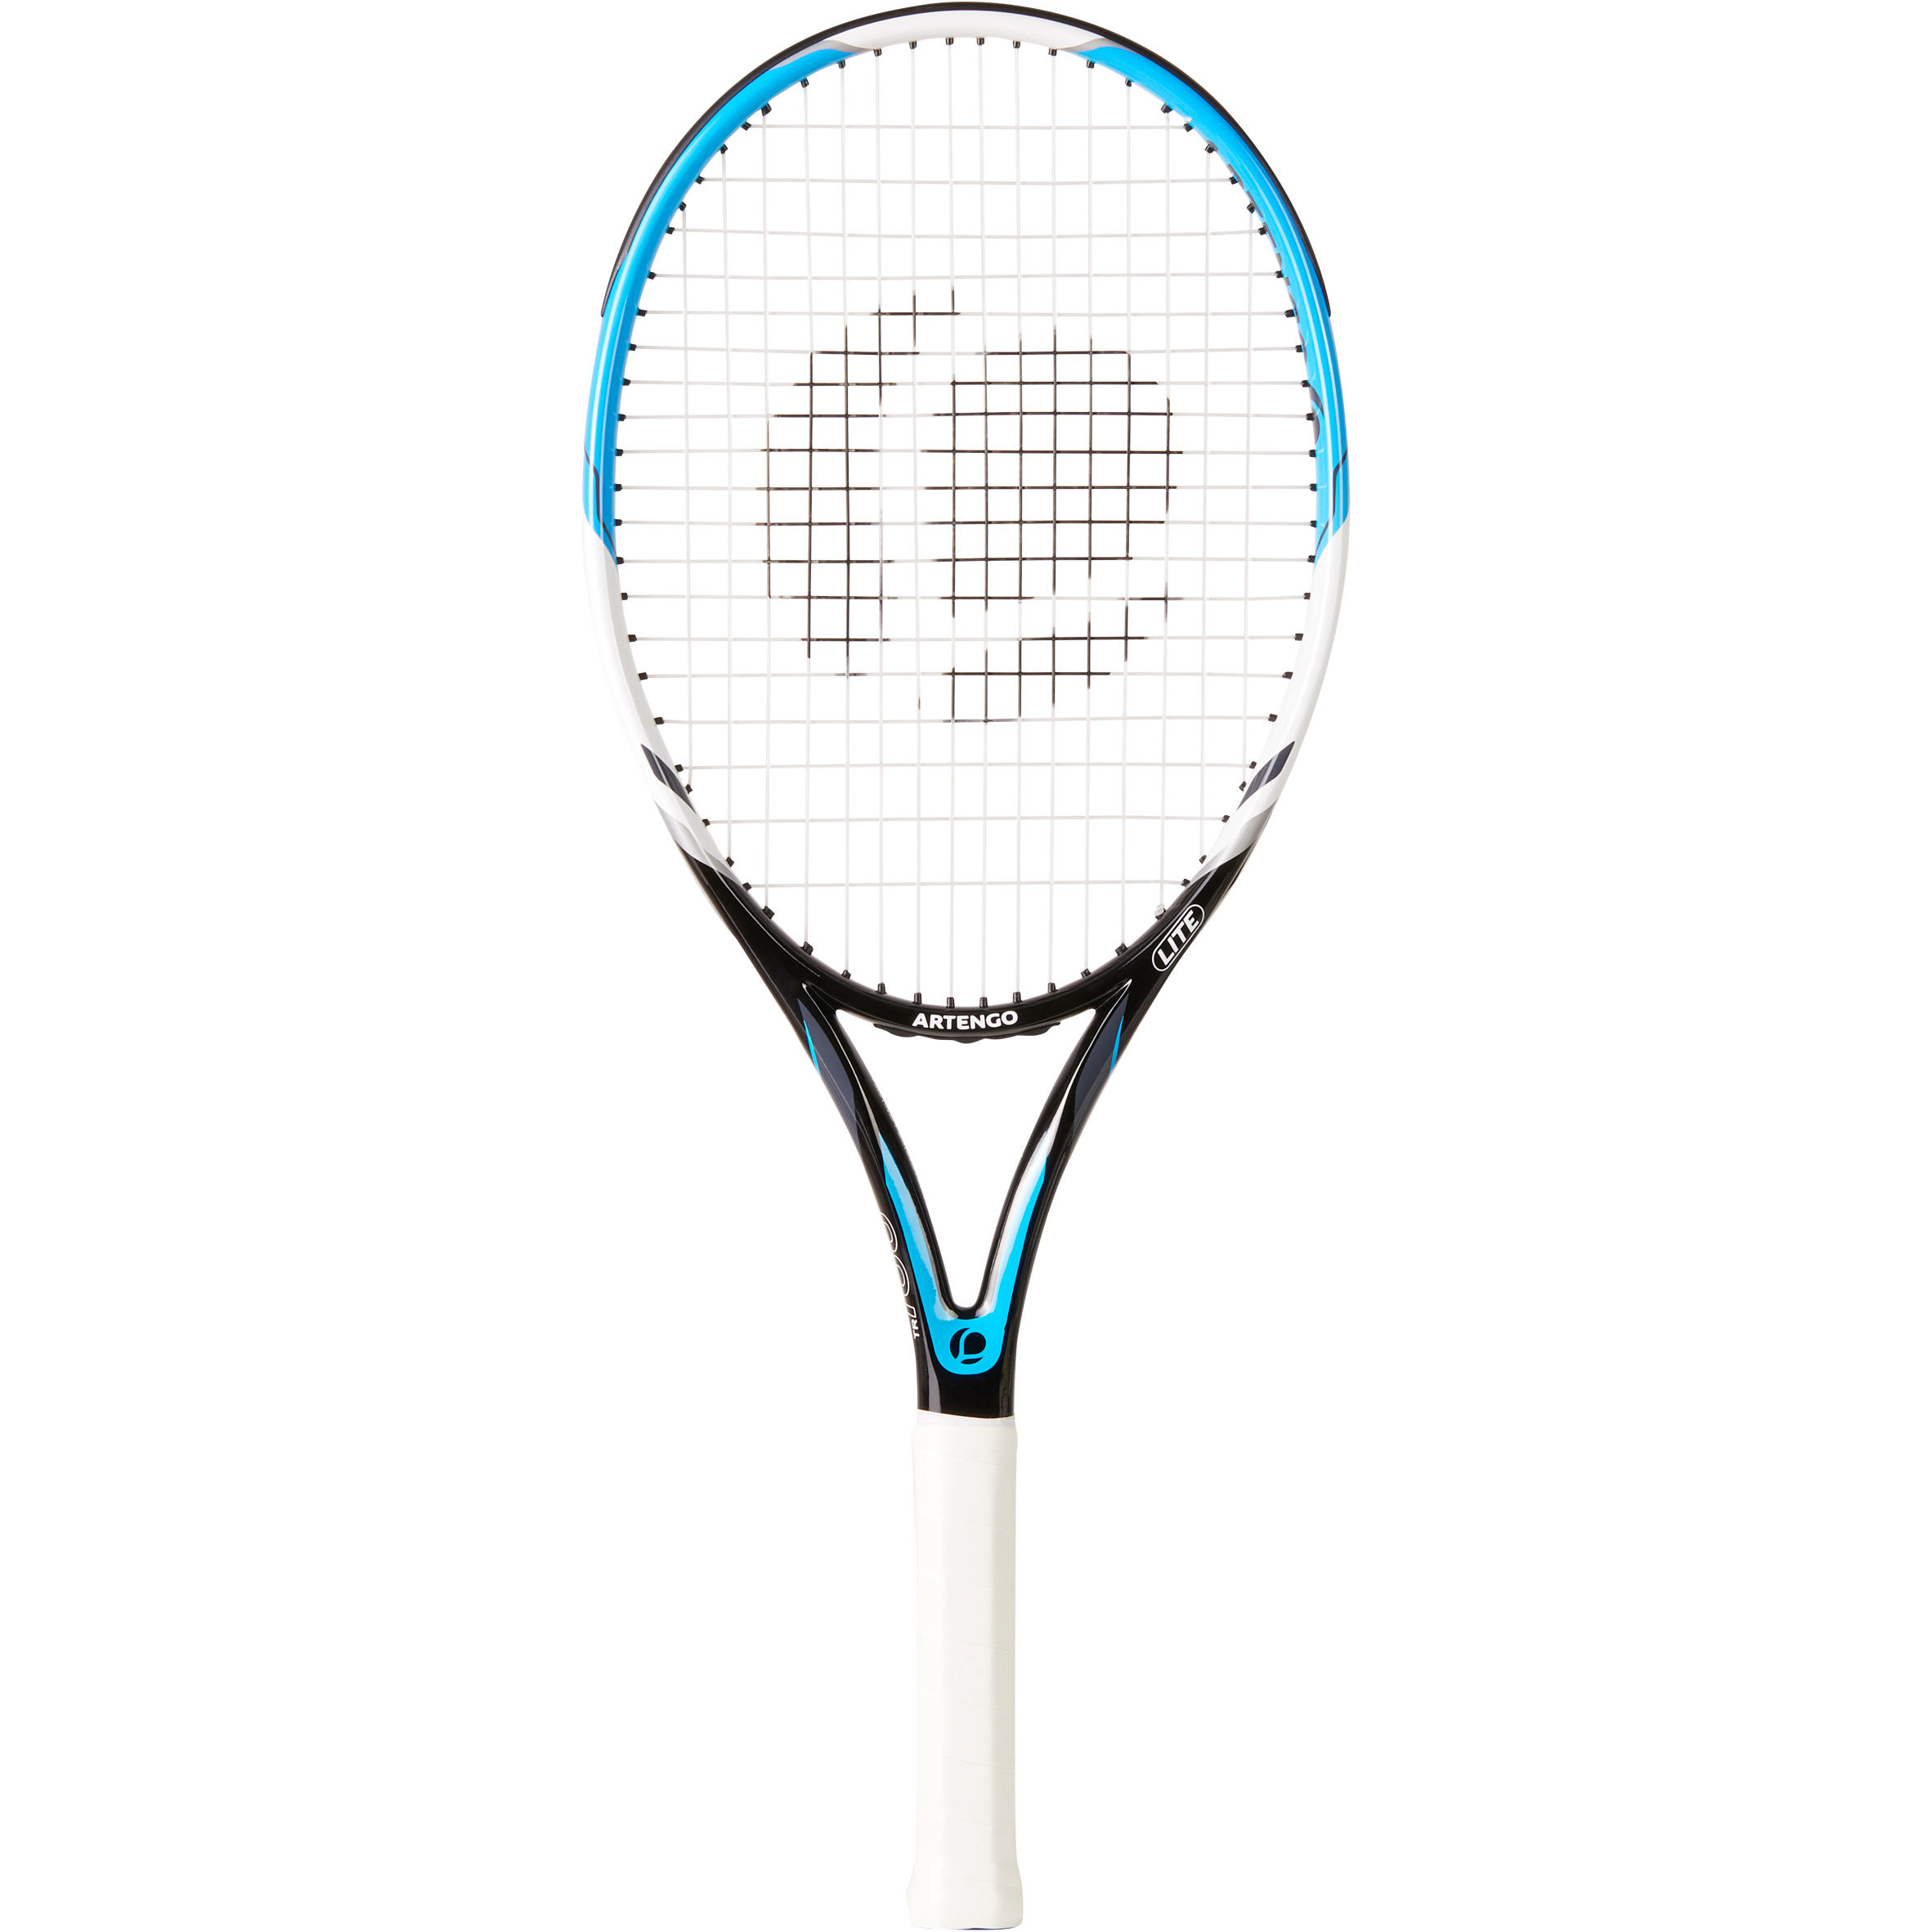 lengte beschaving piloot Buy Adult Tennis Racket TR160 Lite - Blue Online | Decathlon